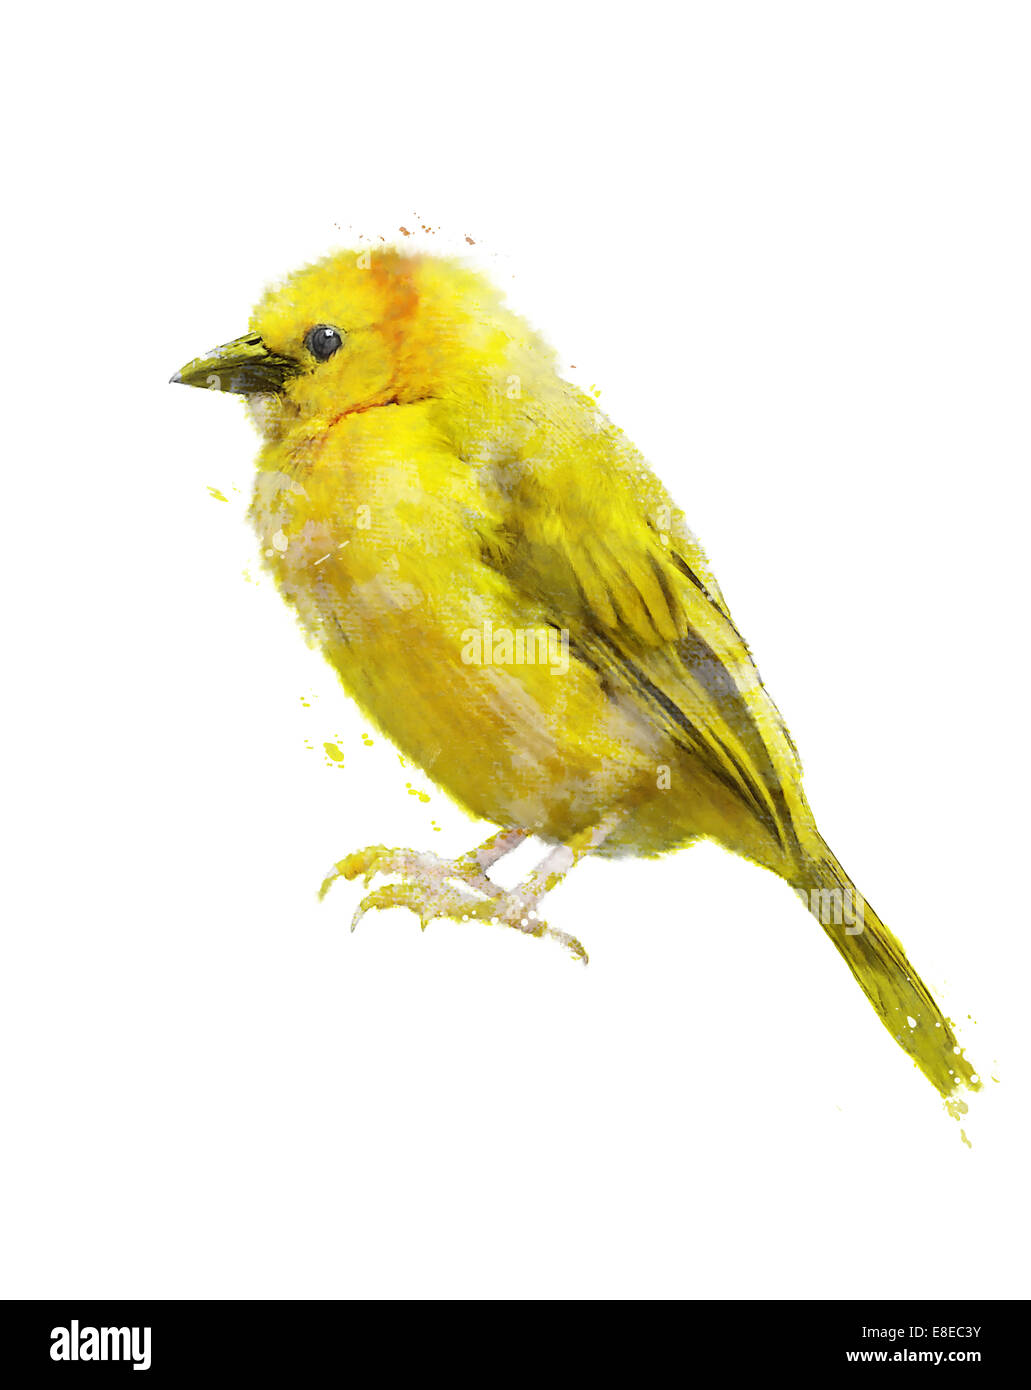 Aquarelle peinture digitale de Yellow Bird Banque D'Images